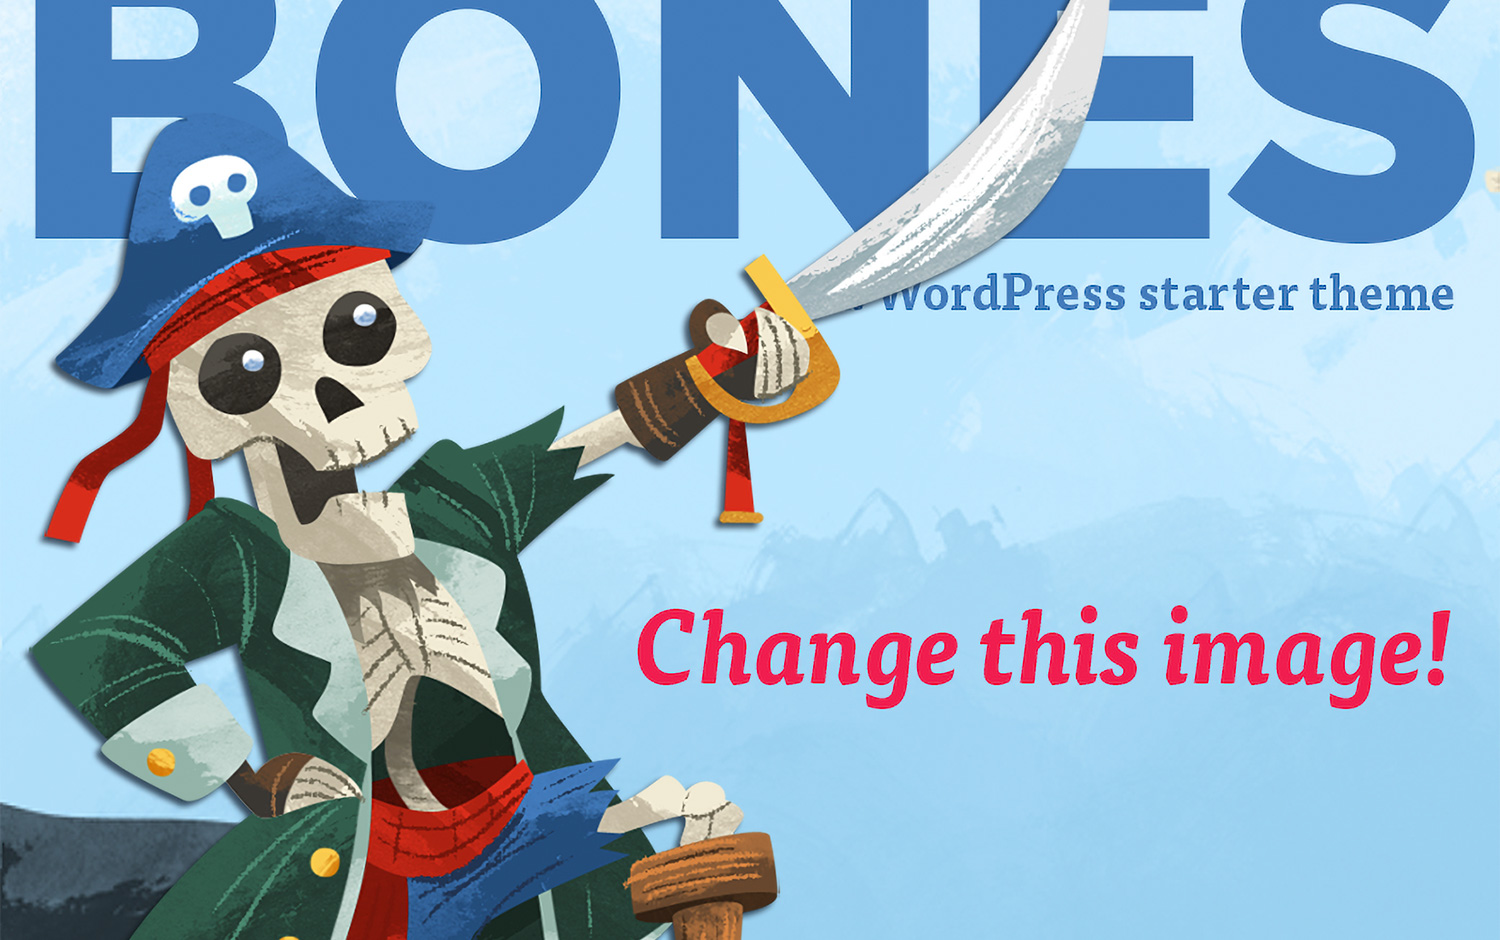 WordPressブランクテーマ「Bones」